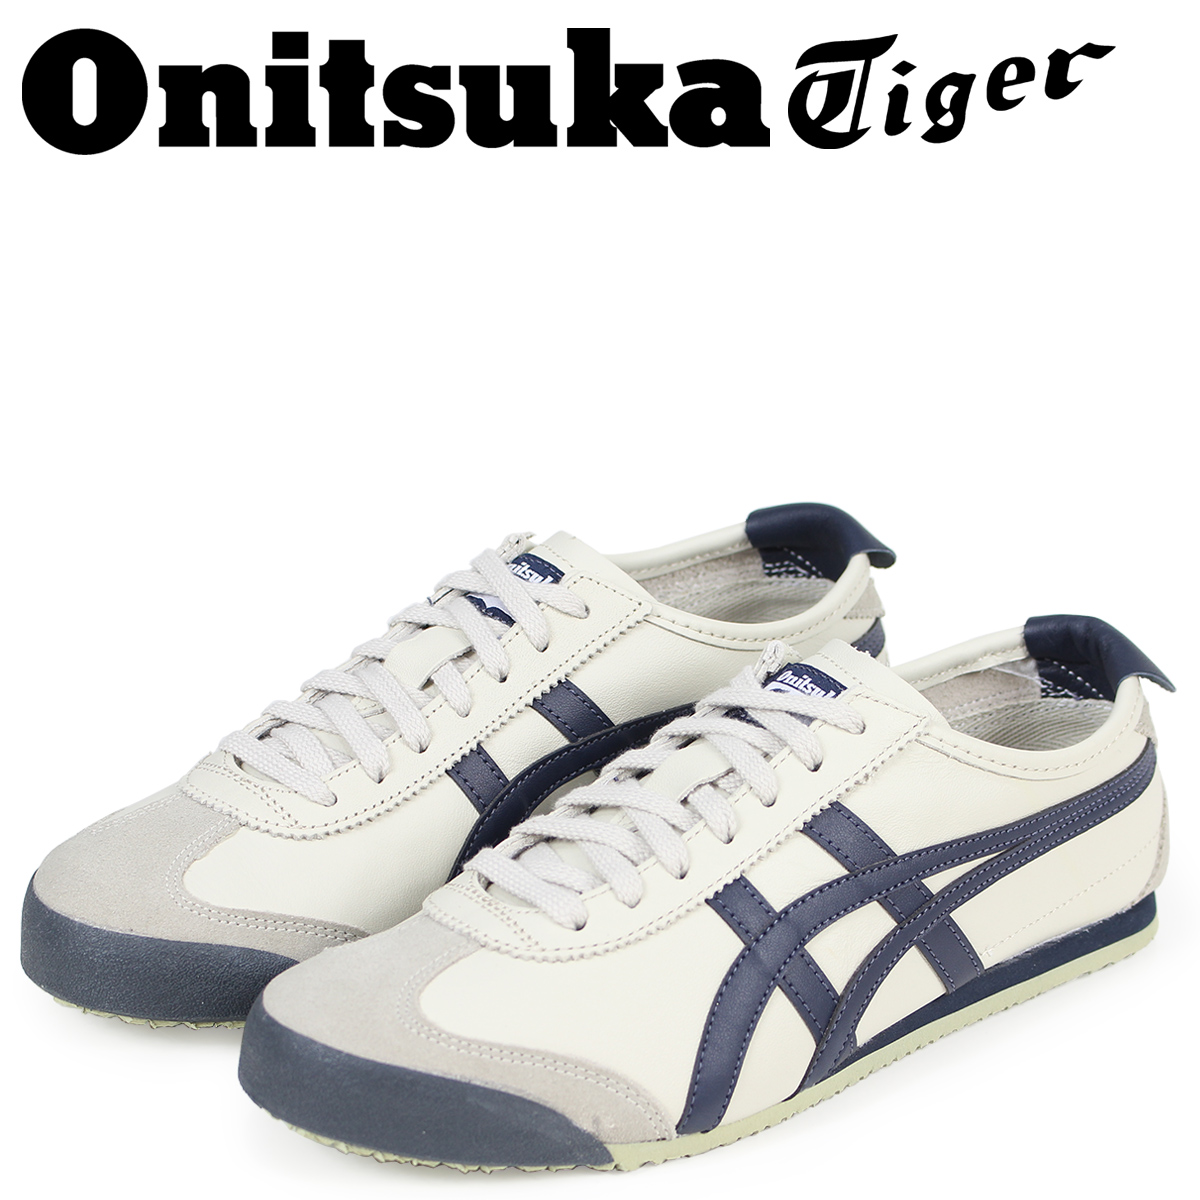 onitsuka tiger online shop europe